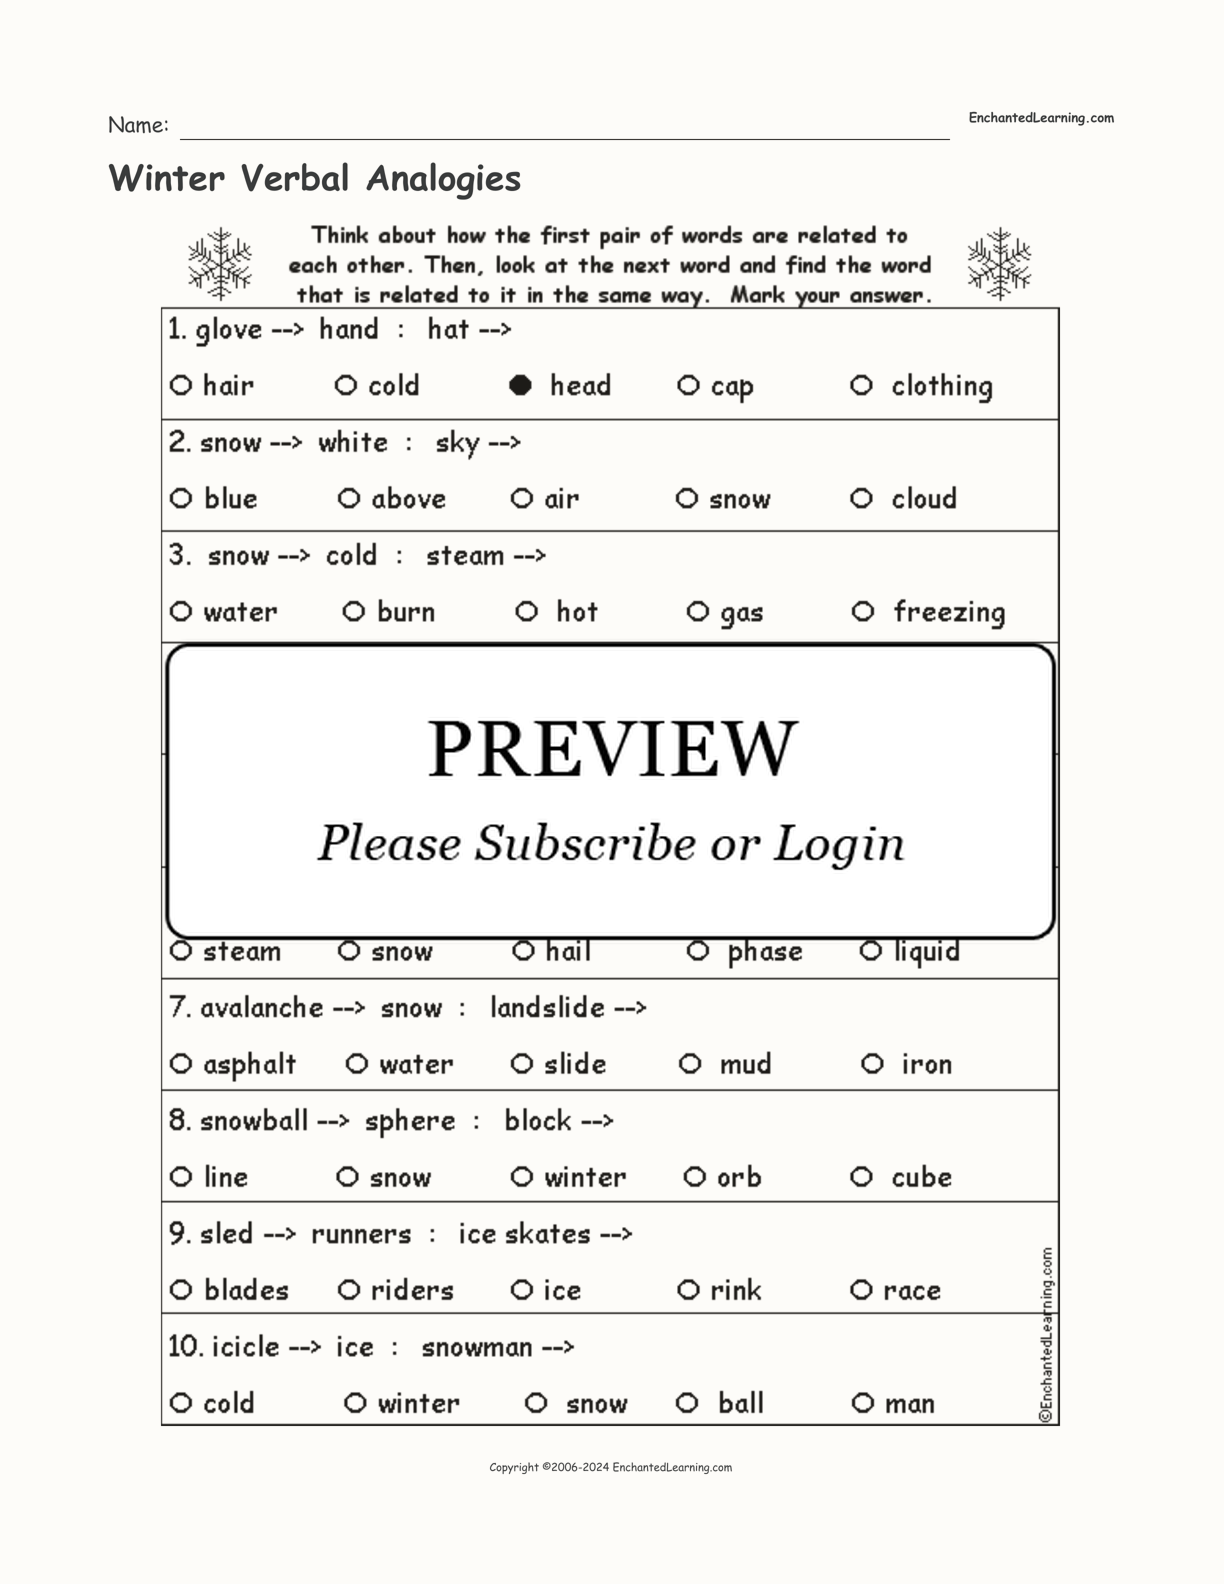 Winter Verbal Analogies interactive worksheet page 1